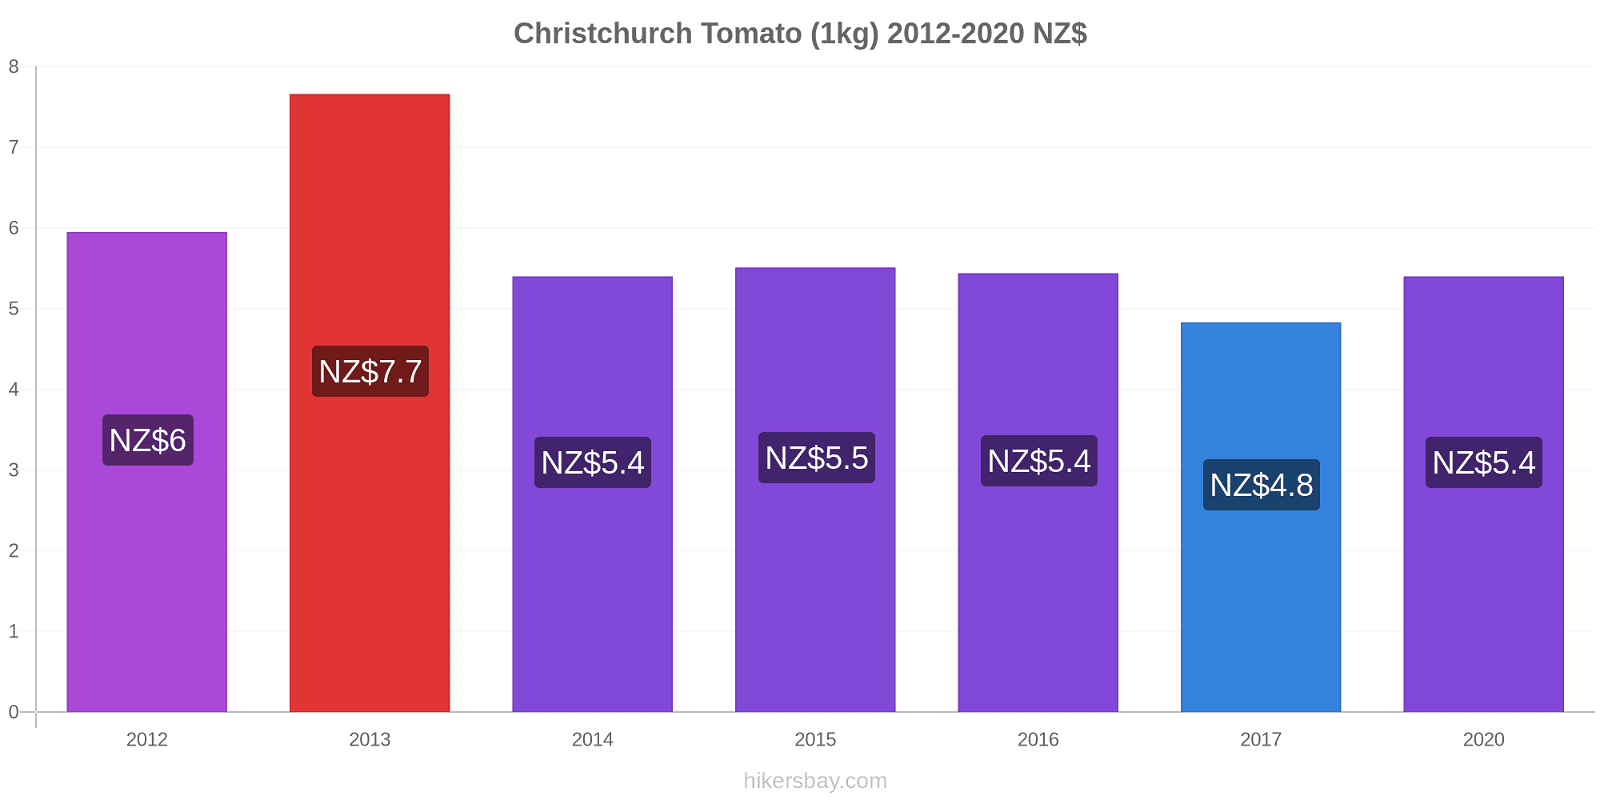 Christchurch price changes Tomato (1kg) hikersbay.com